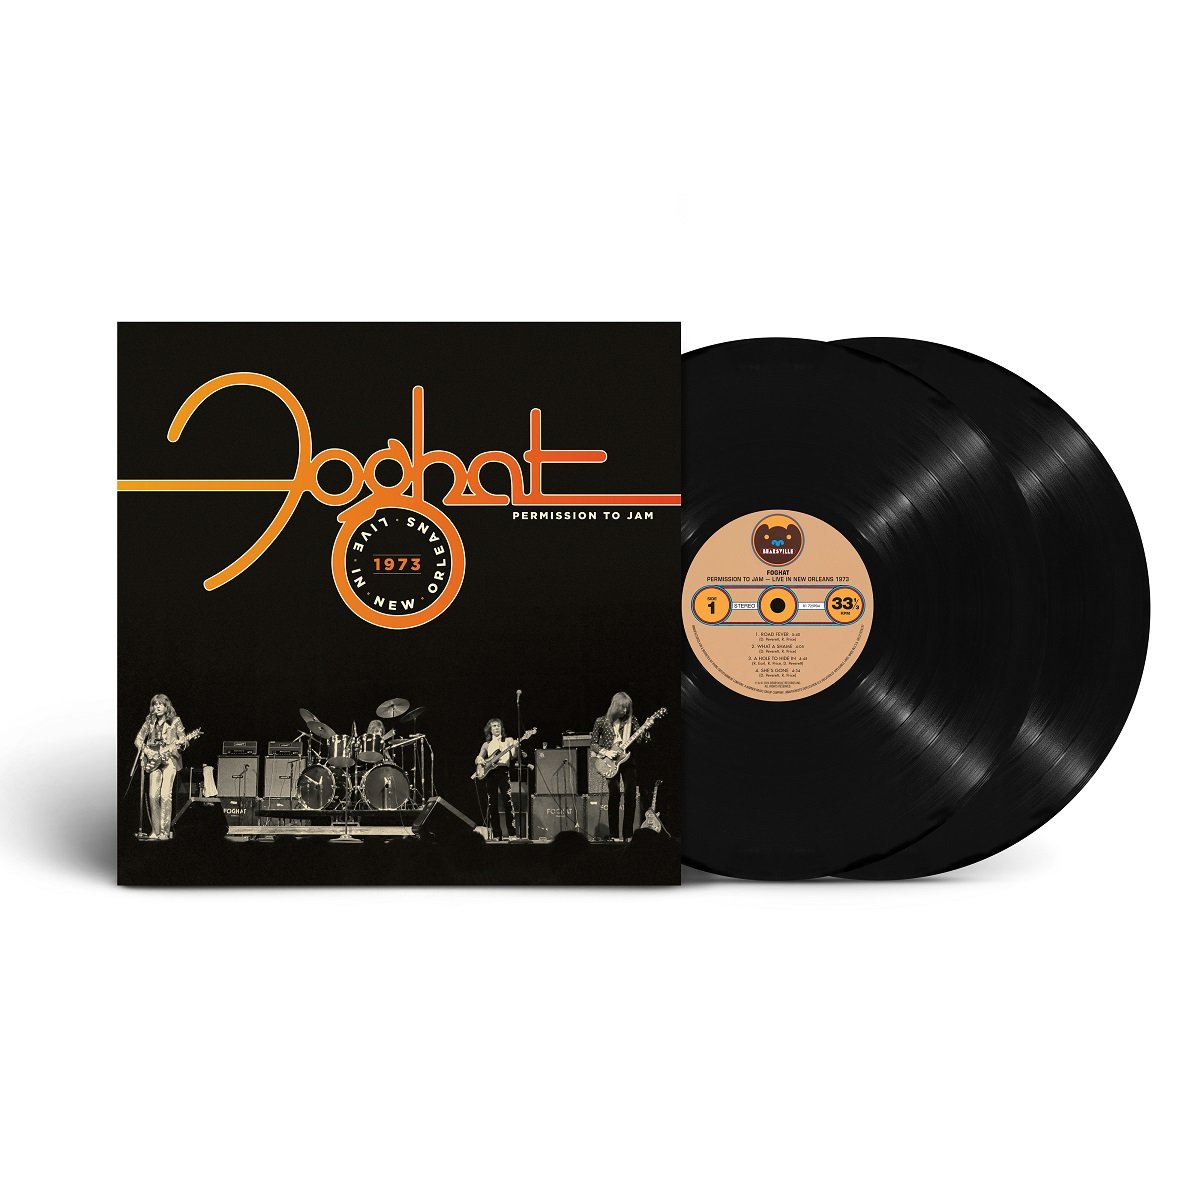 CD Shop - FOGHAT LIVE IN NEW ORLEANS 1973